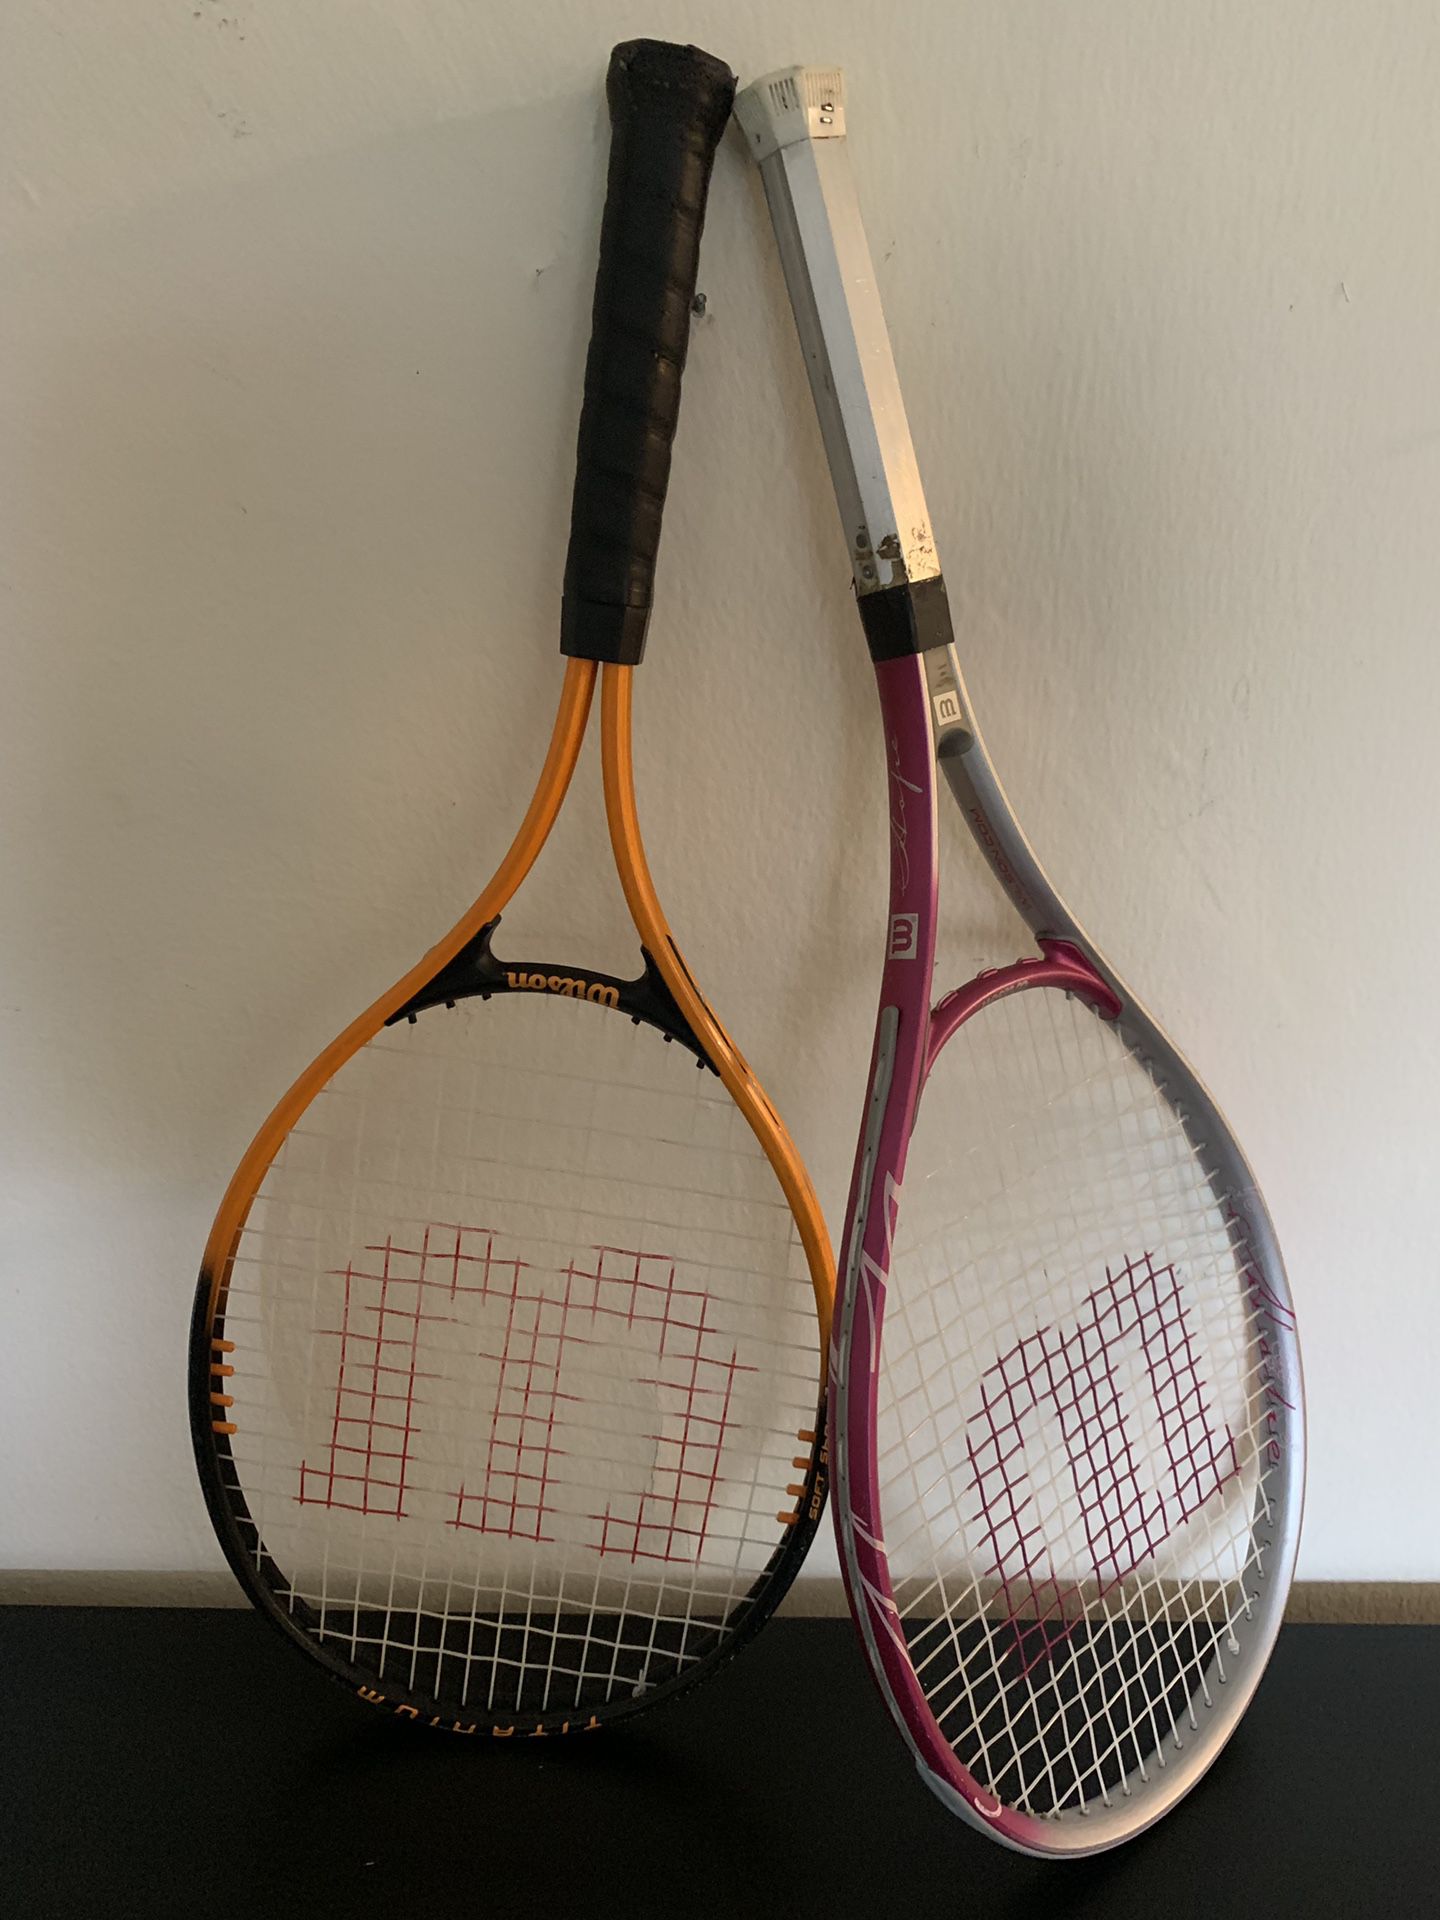 Pair of Wilson Tennis Rackets